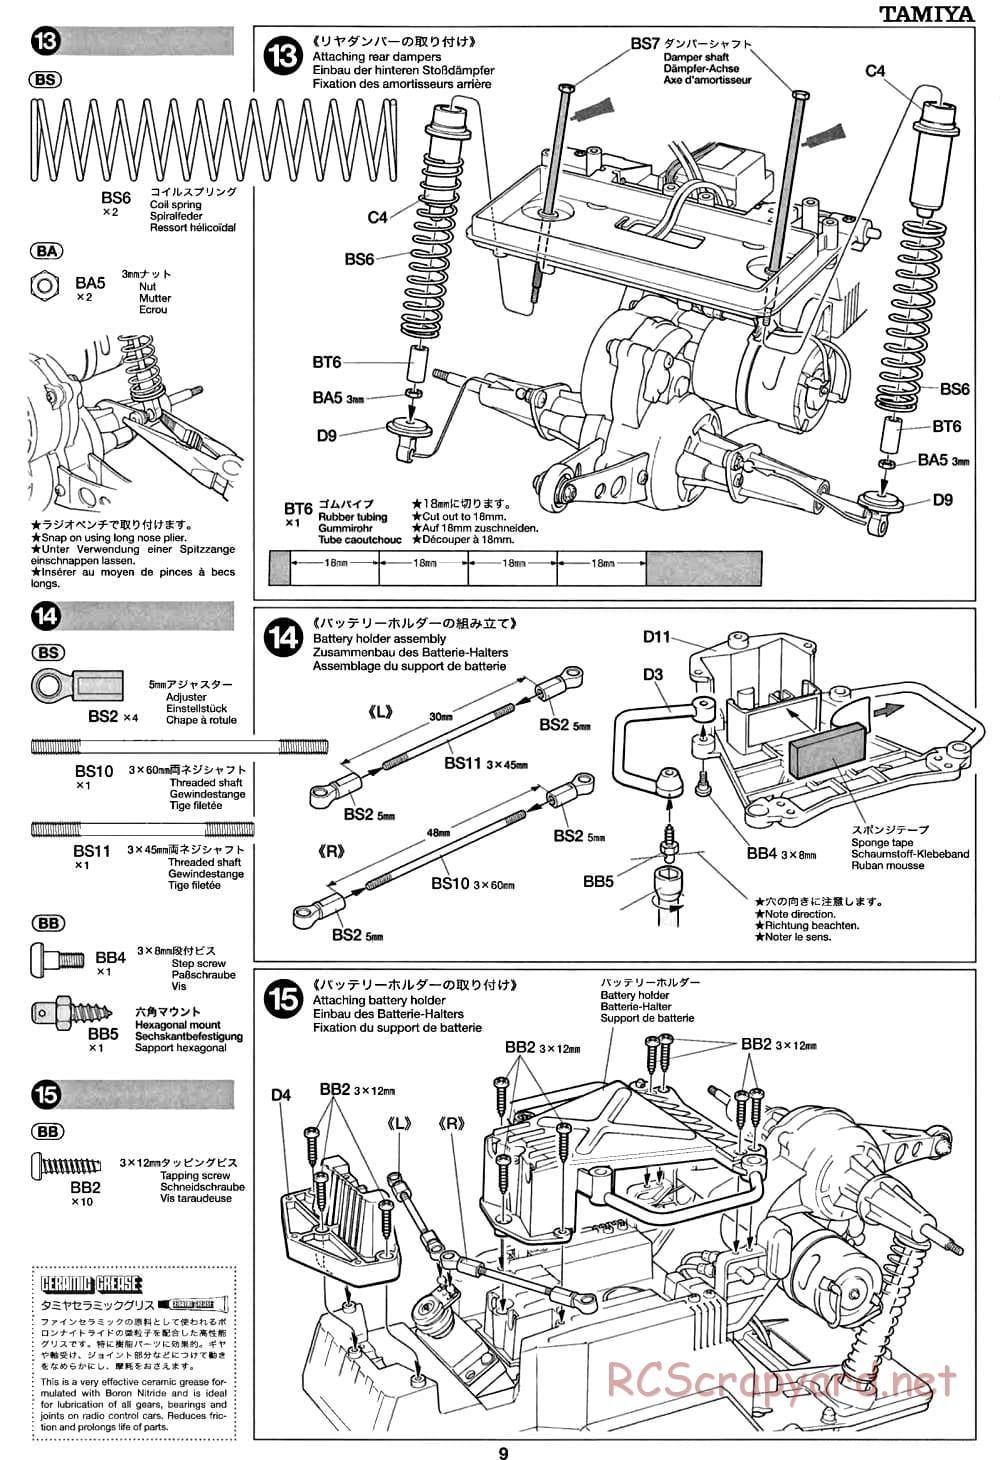 Tamiya - CW-01 Chassis - Manual - Page 9